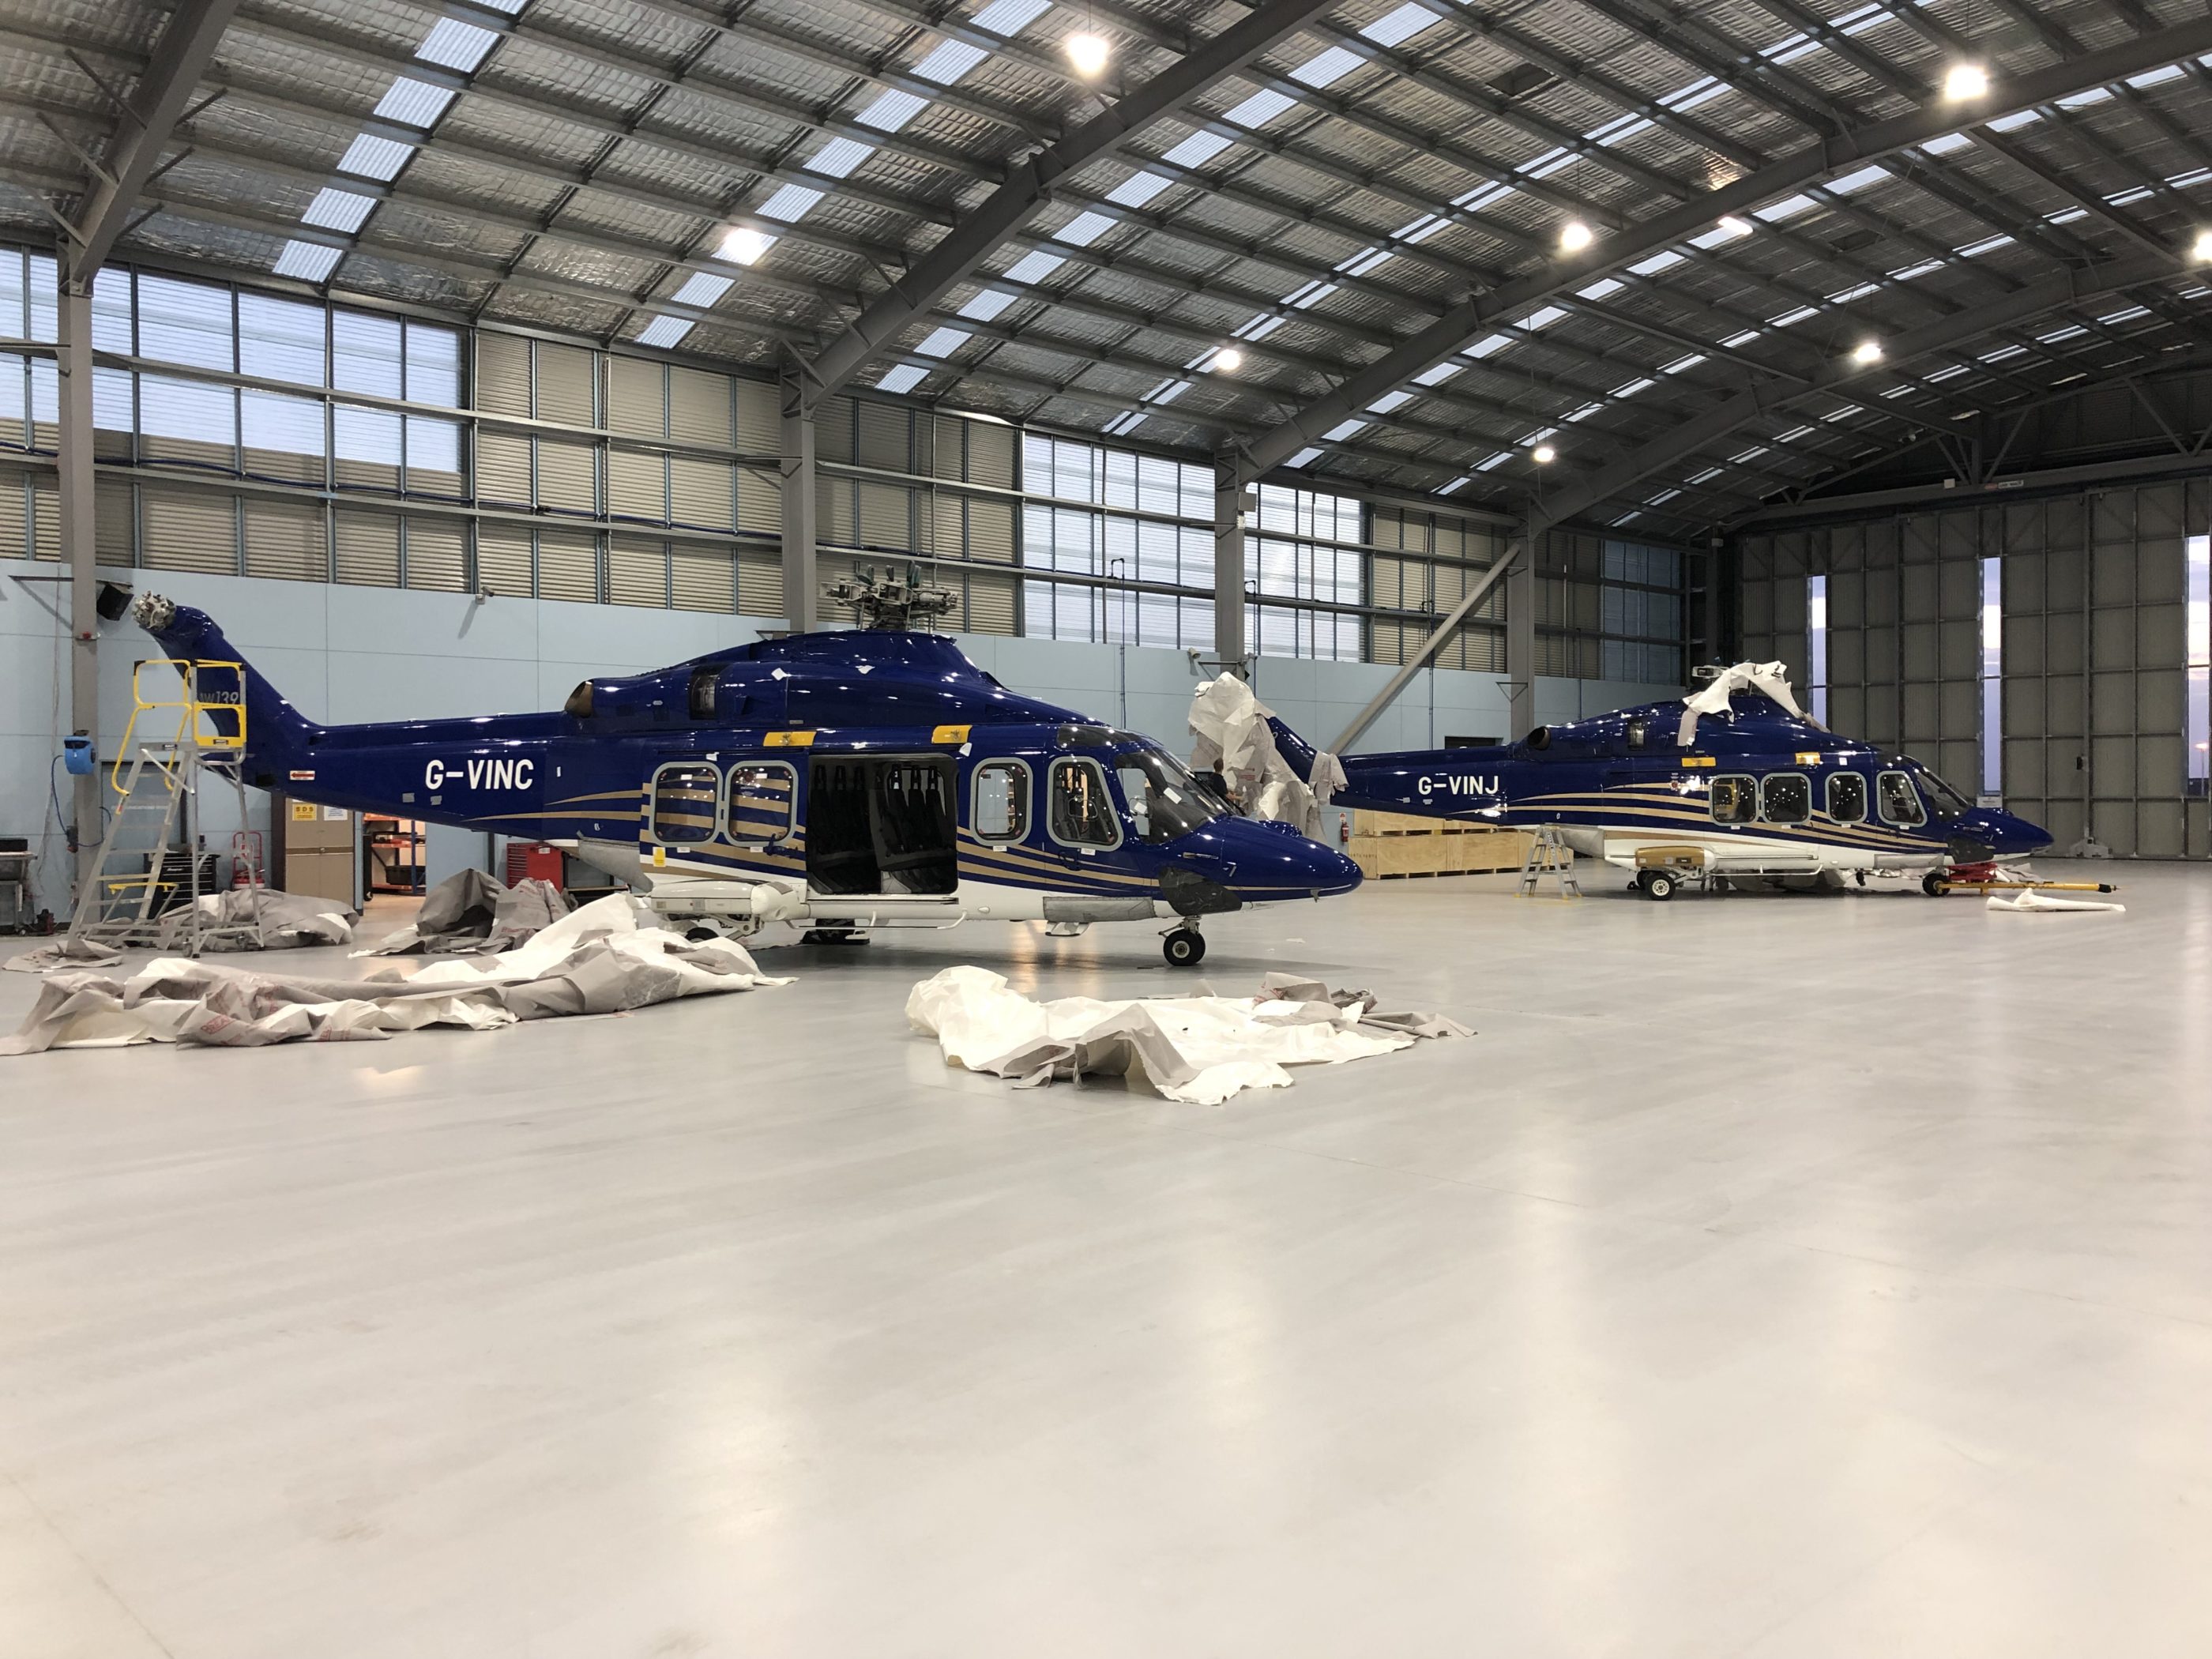 The Leonardo AW139s arrived in Australia from Aberdeen, Scotland. LCI Photo